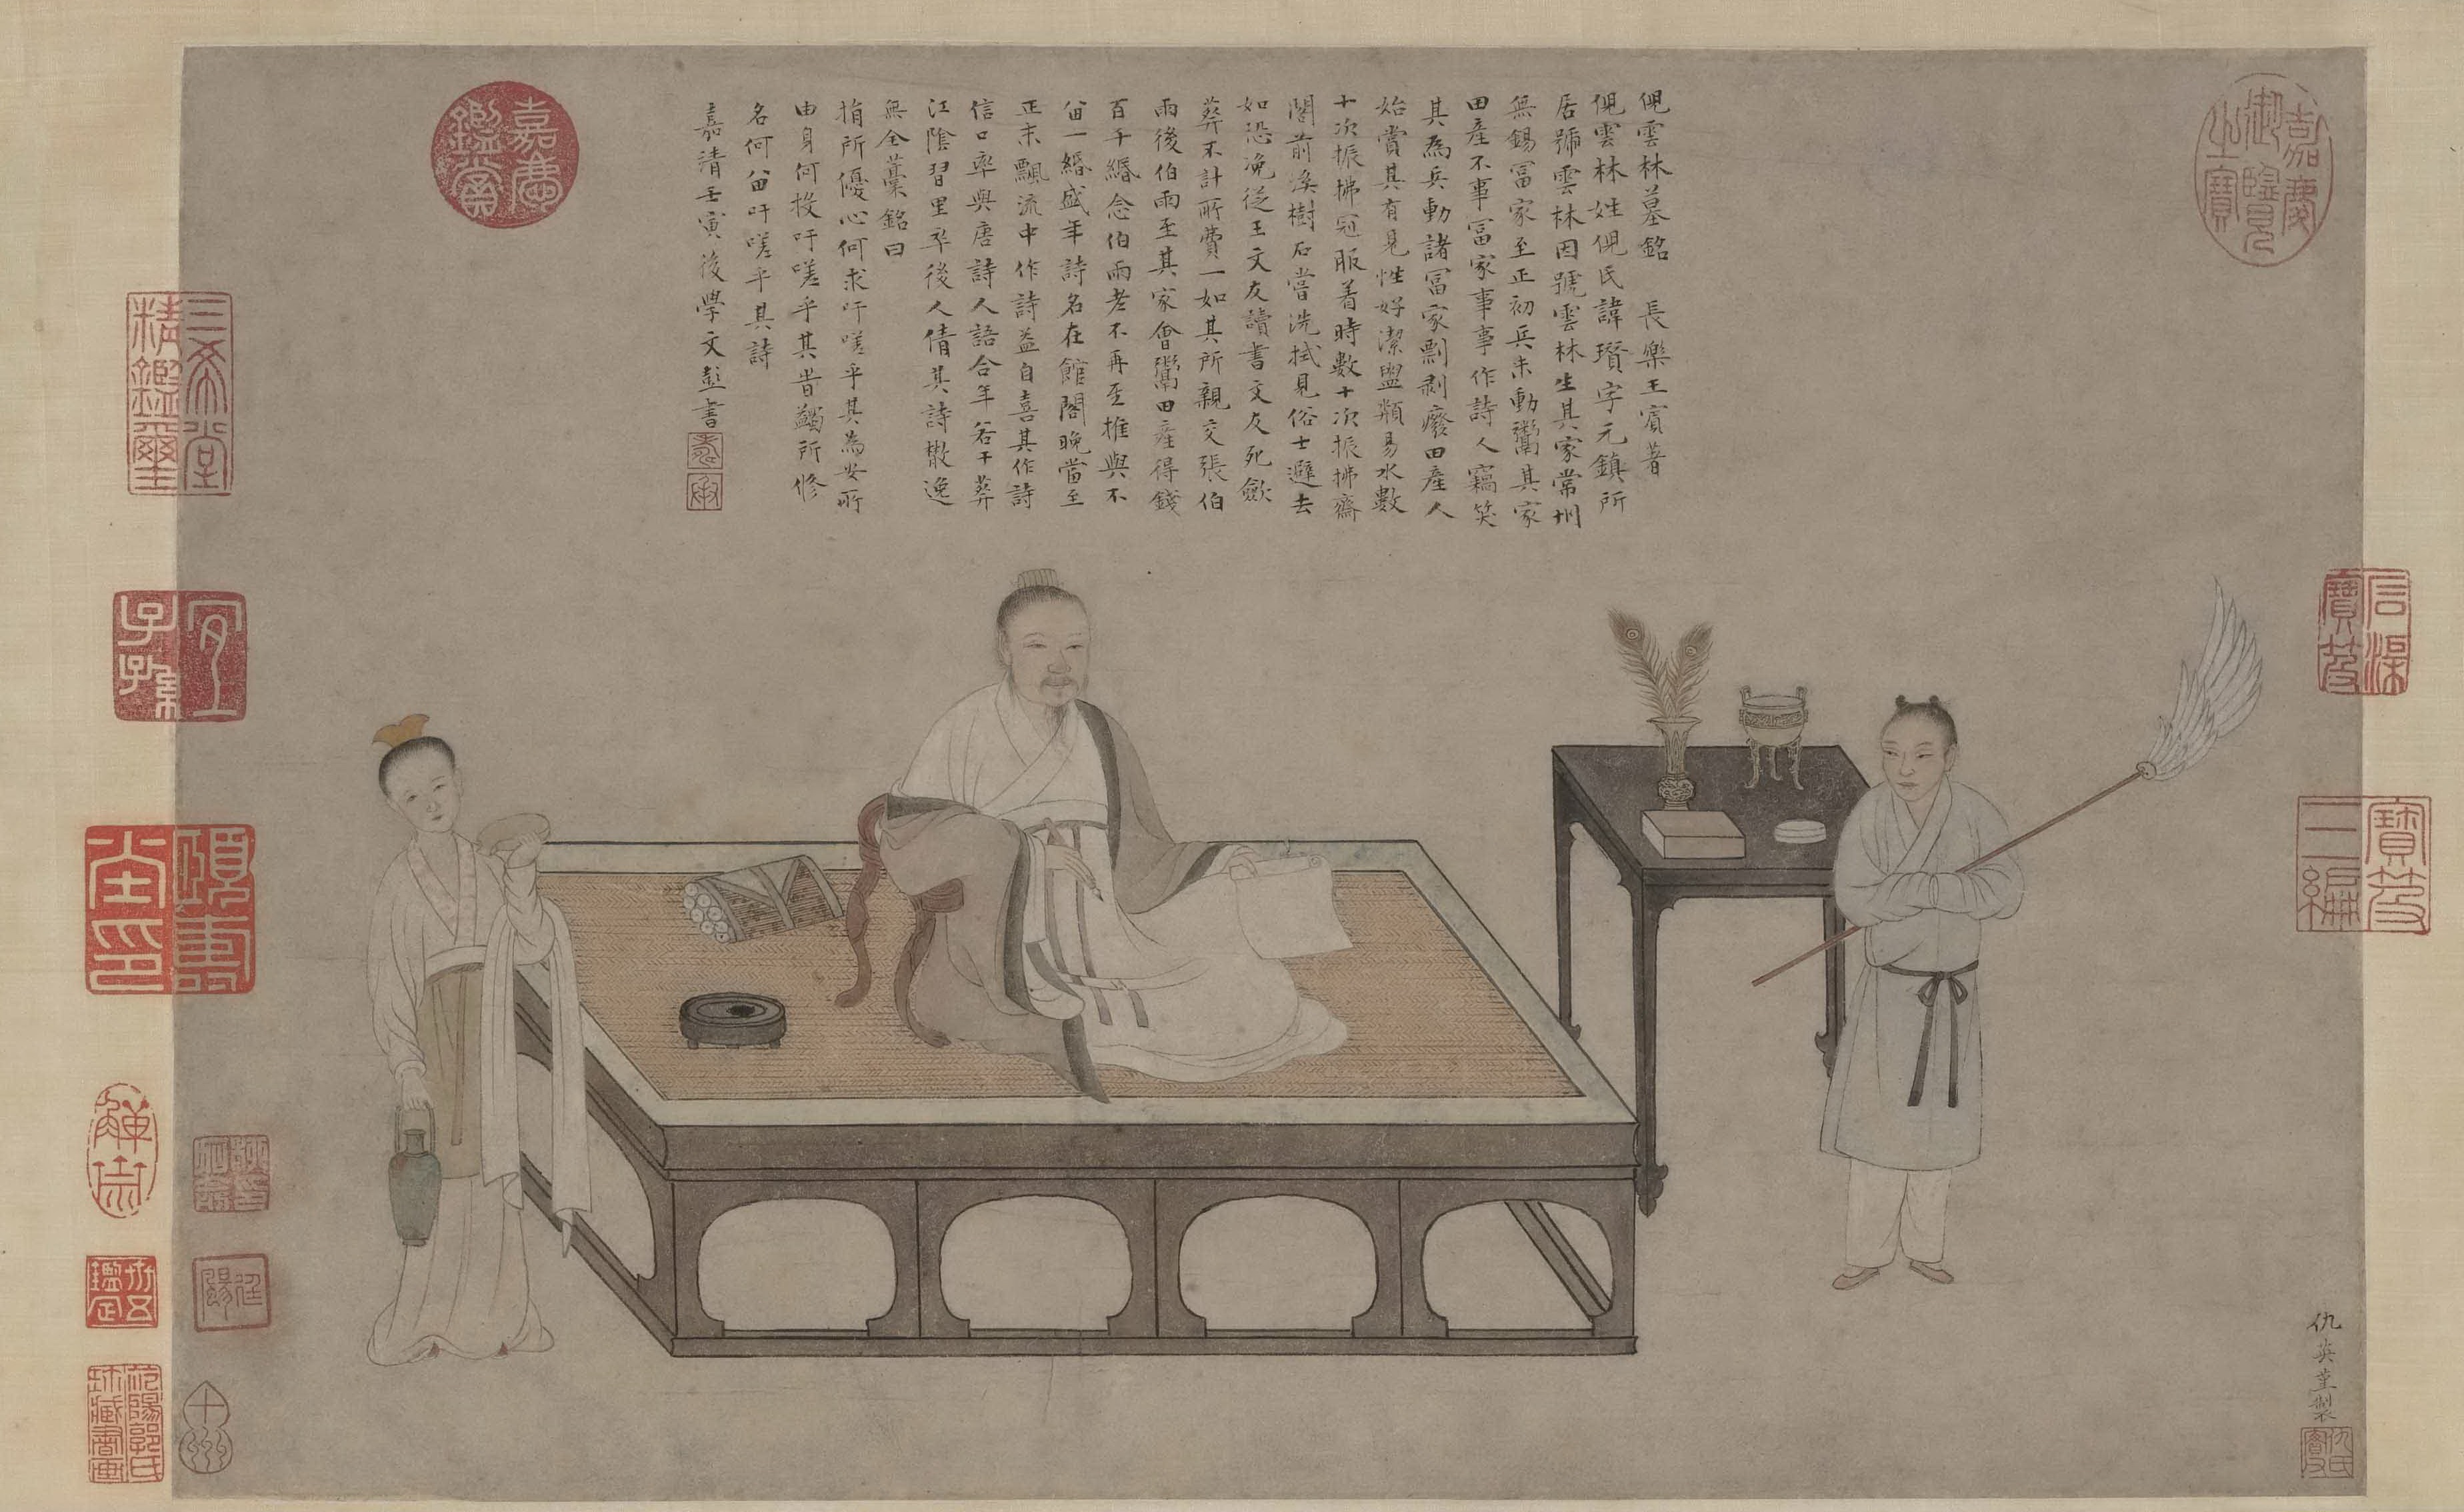 Portrait of Ni Zan; Copy of praise by Zhang Yu in running script